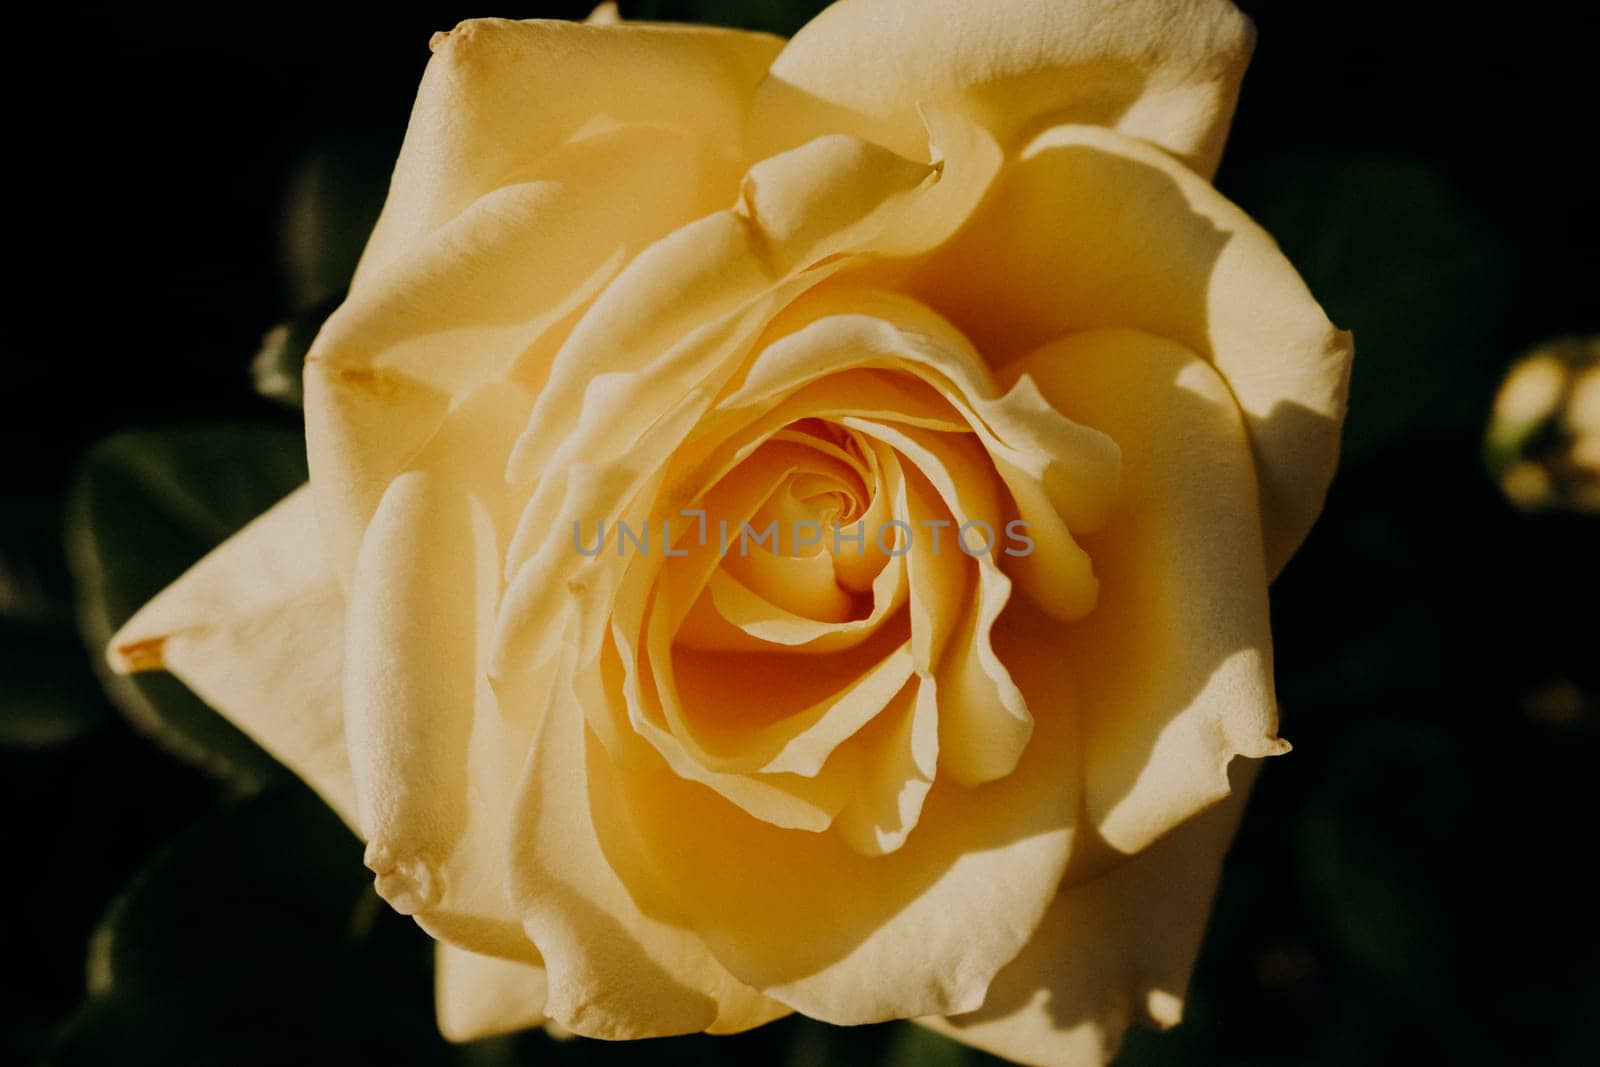 Rose flowering, opening petals on big bud. Spring, summer floral - yellow flower by kristina_kokhanova